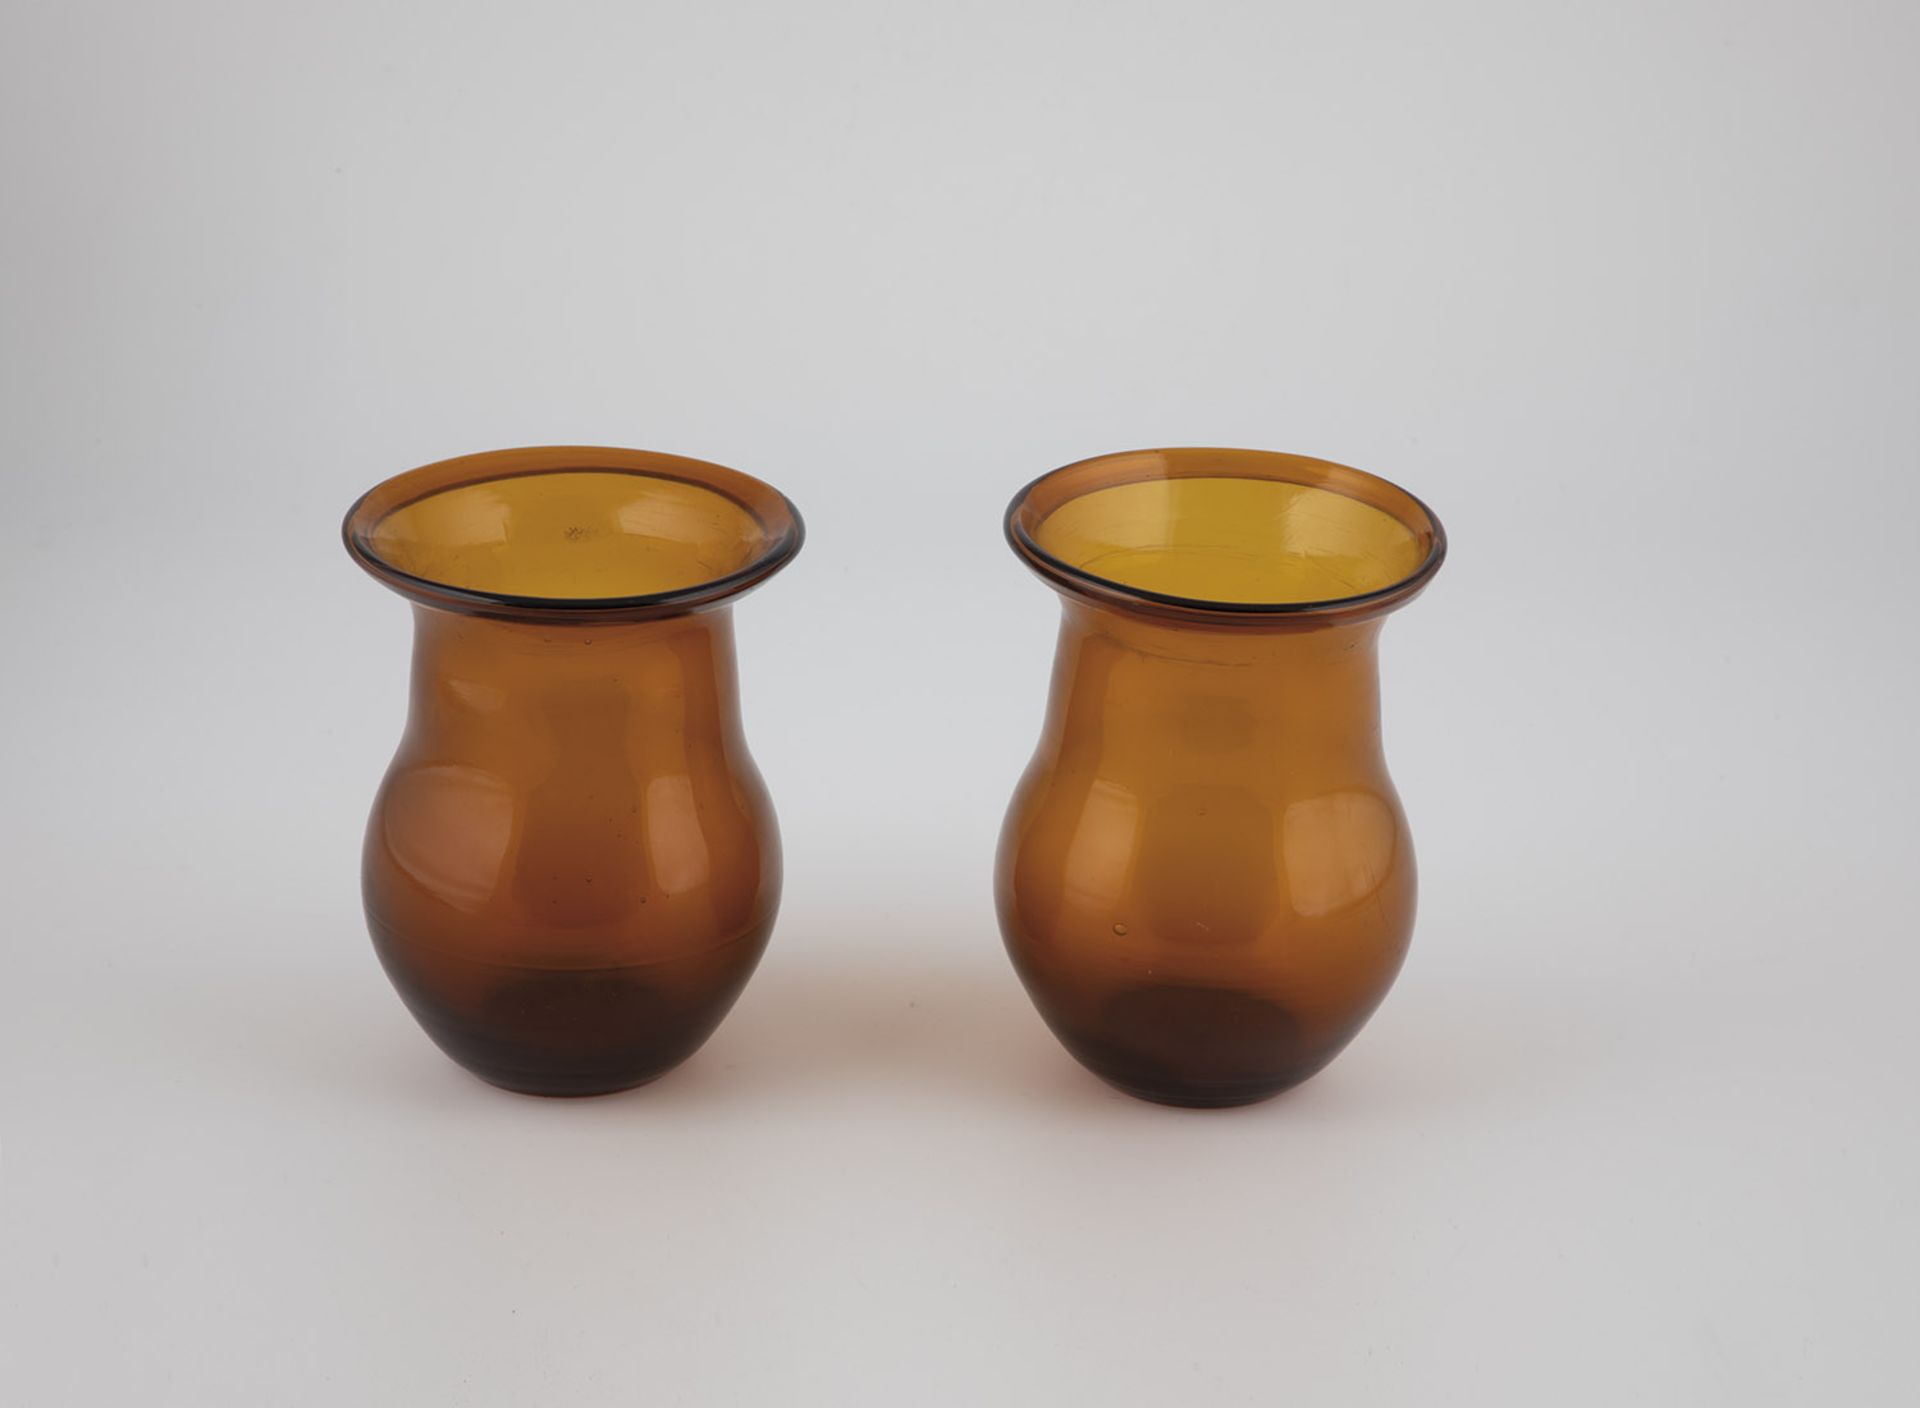 Two storage jars, 19th/20th century, brown glass. H. 14.5 cm